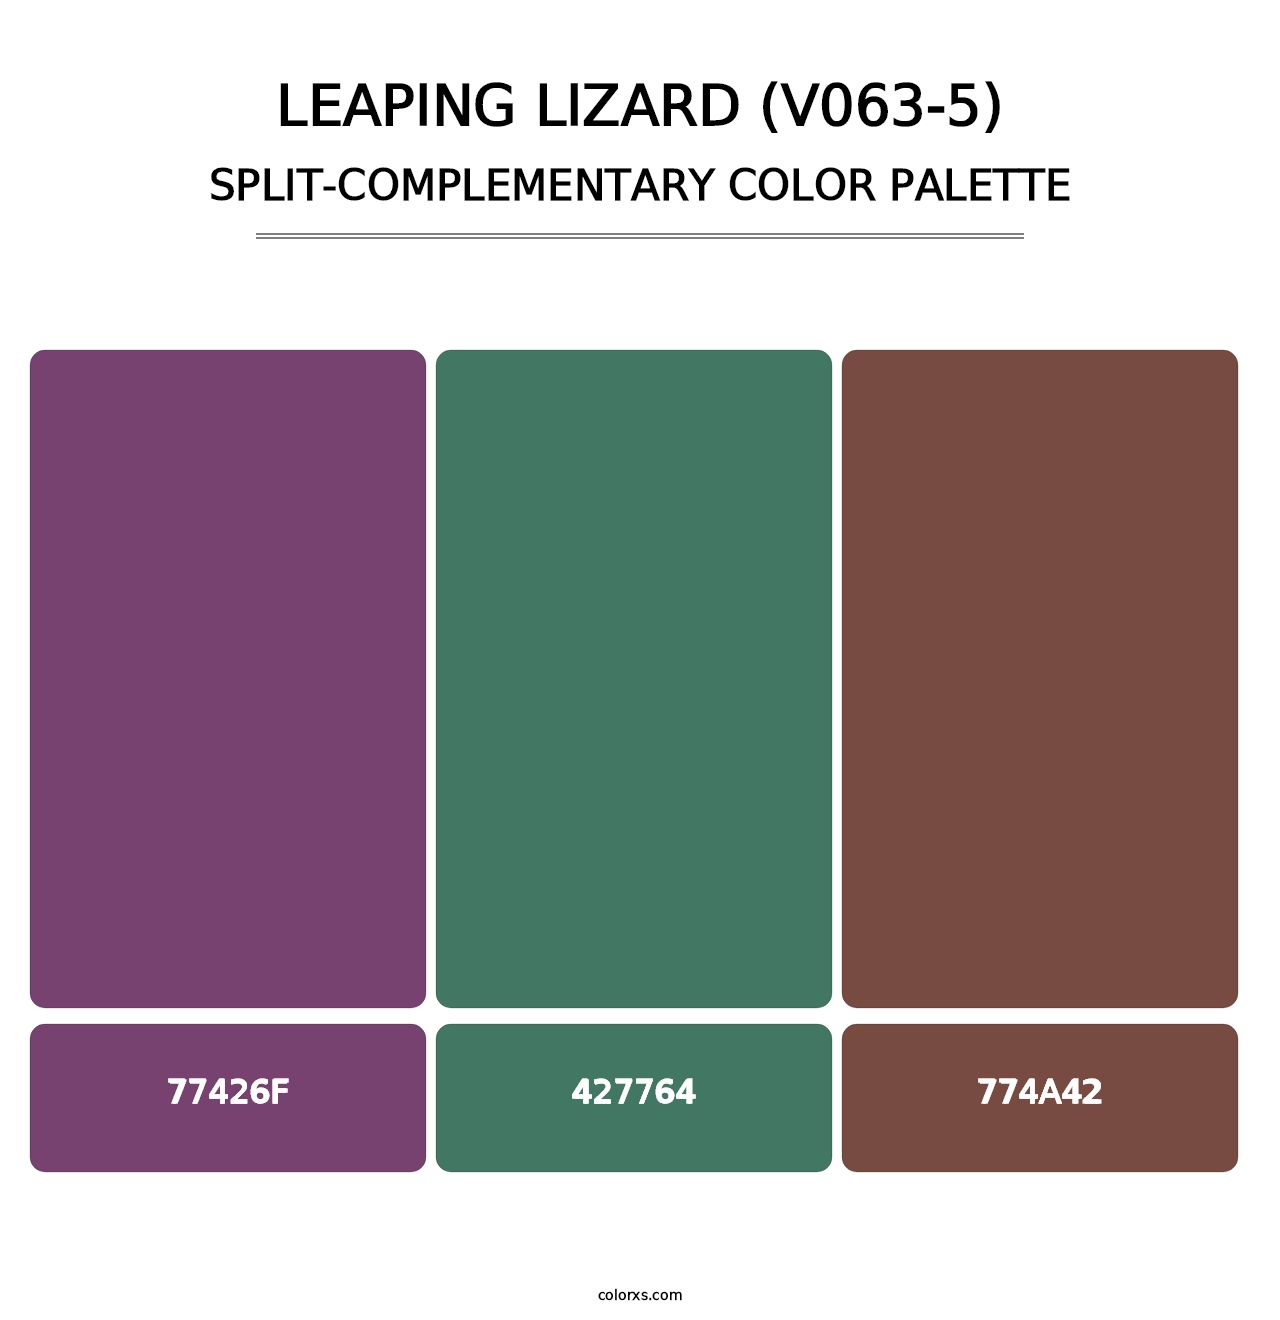 Leaping Lizard (V063-5) - Split-Complementary Color Palette